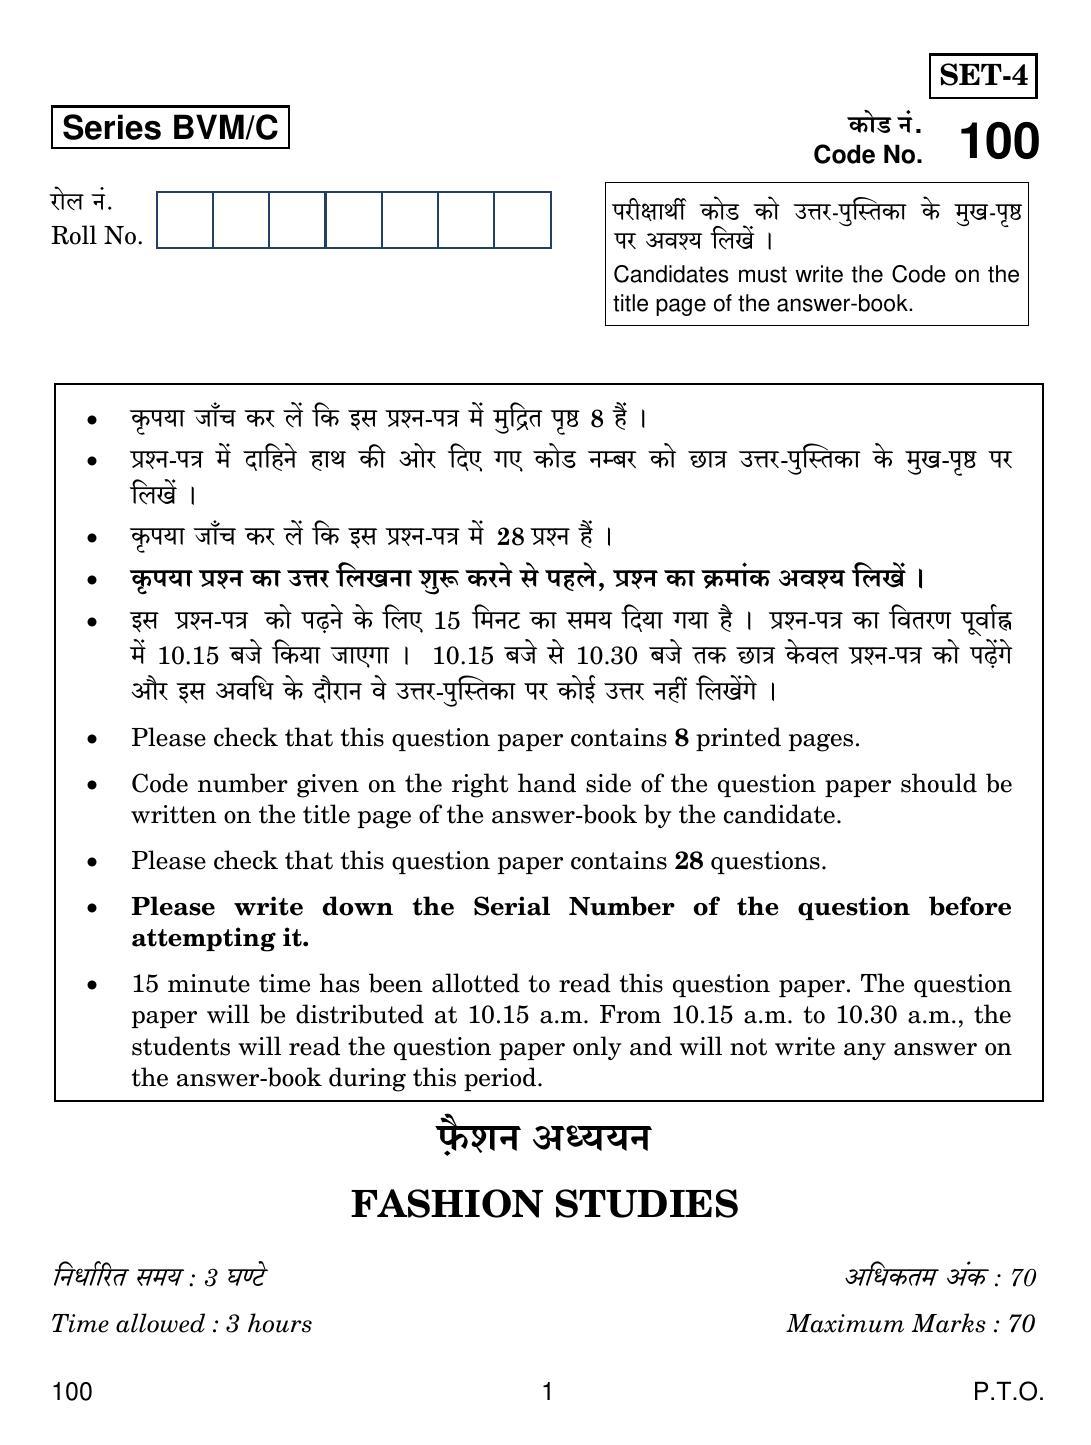 CBSE Class 12 100 FASHION STUDIES 2019 Compartment Question Paper - Page 1